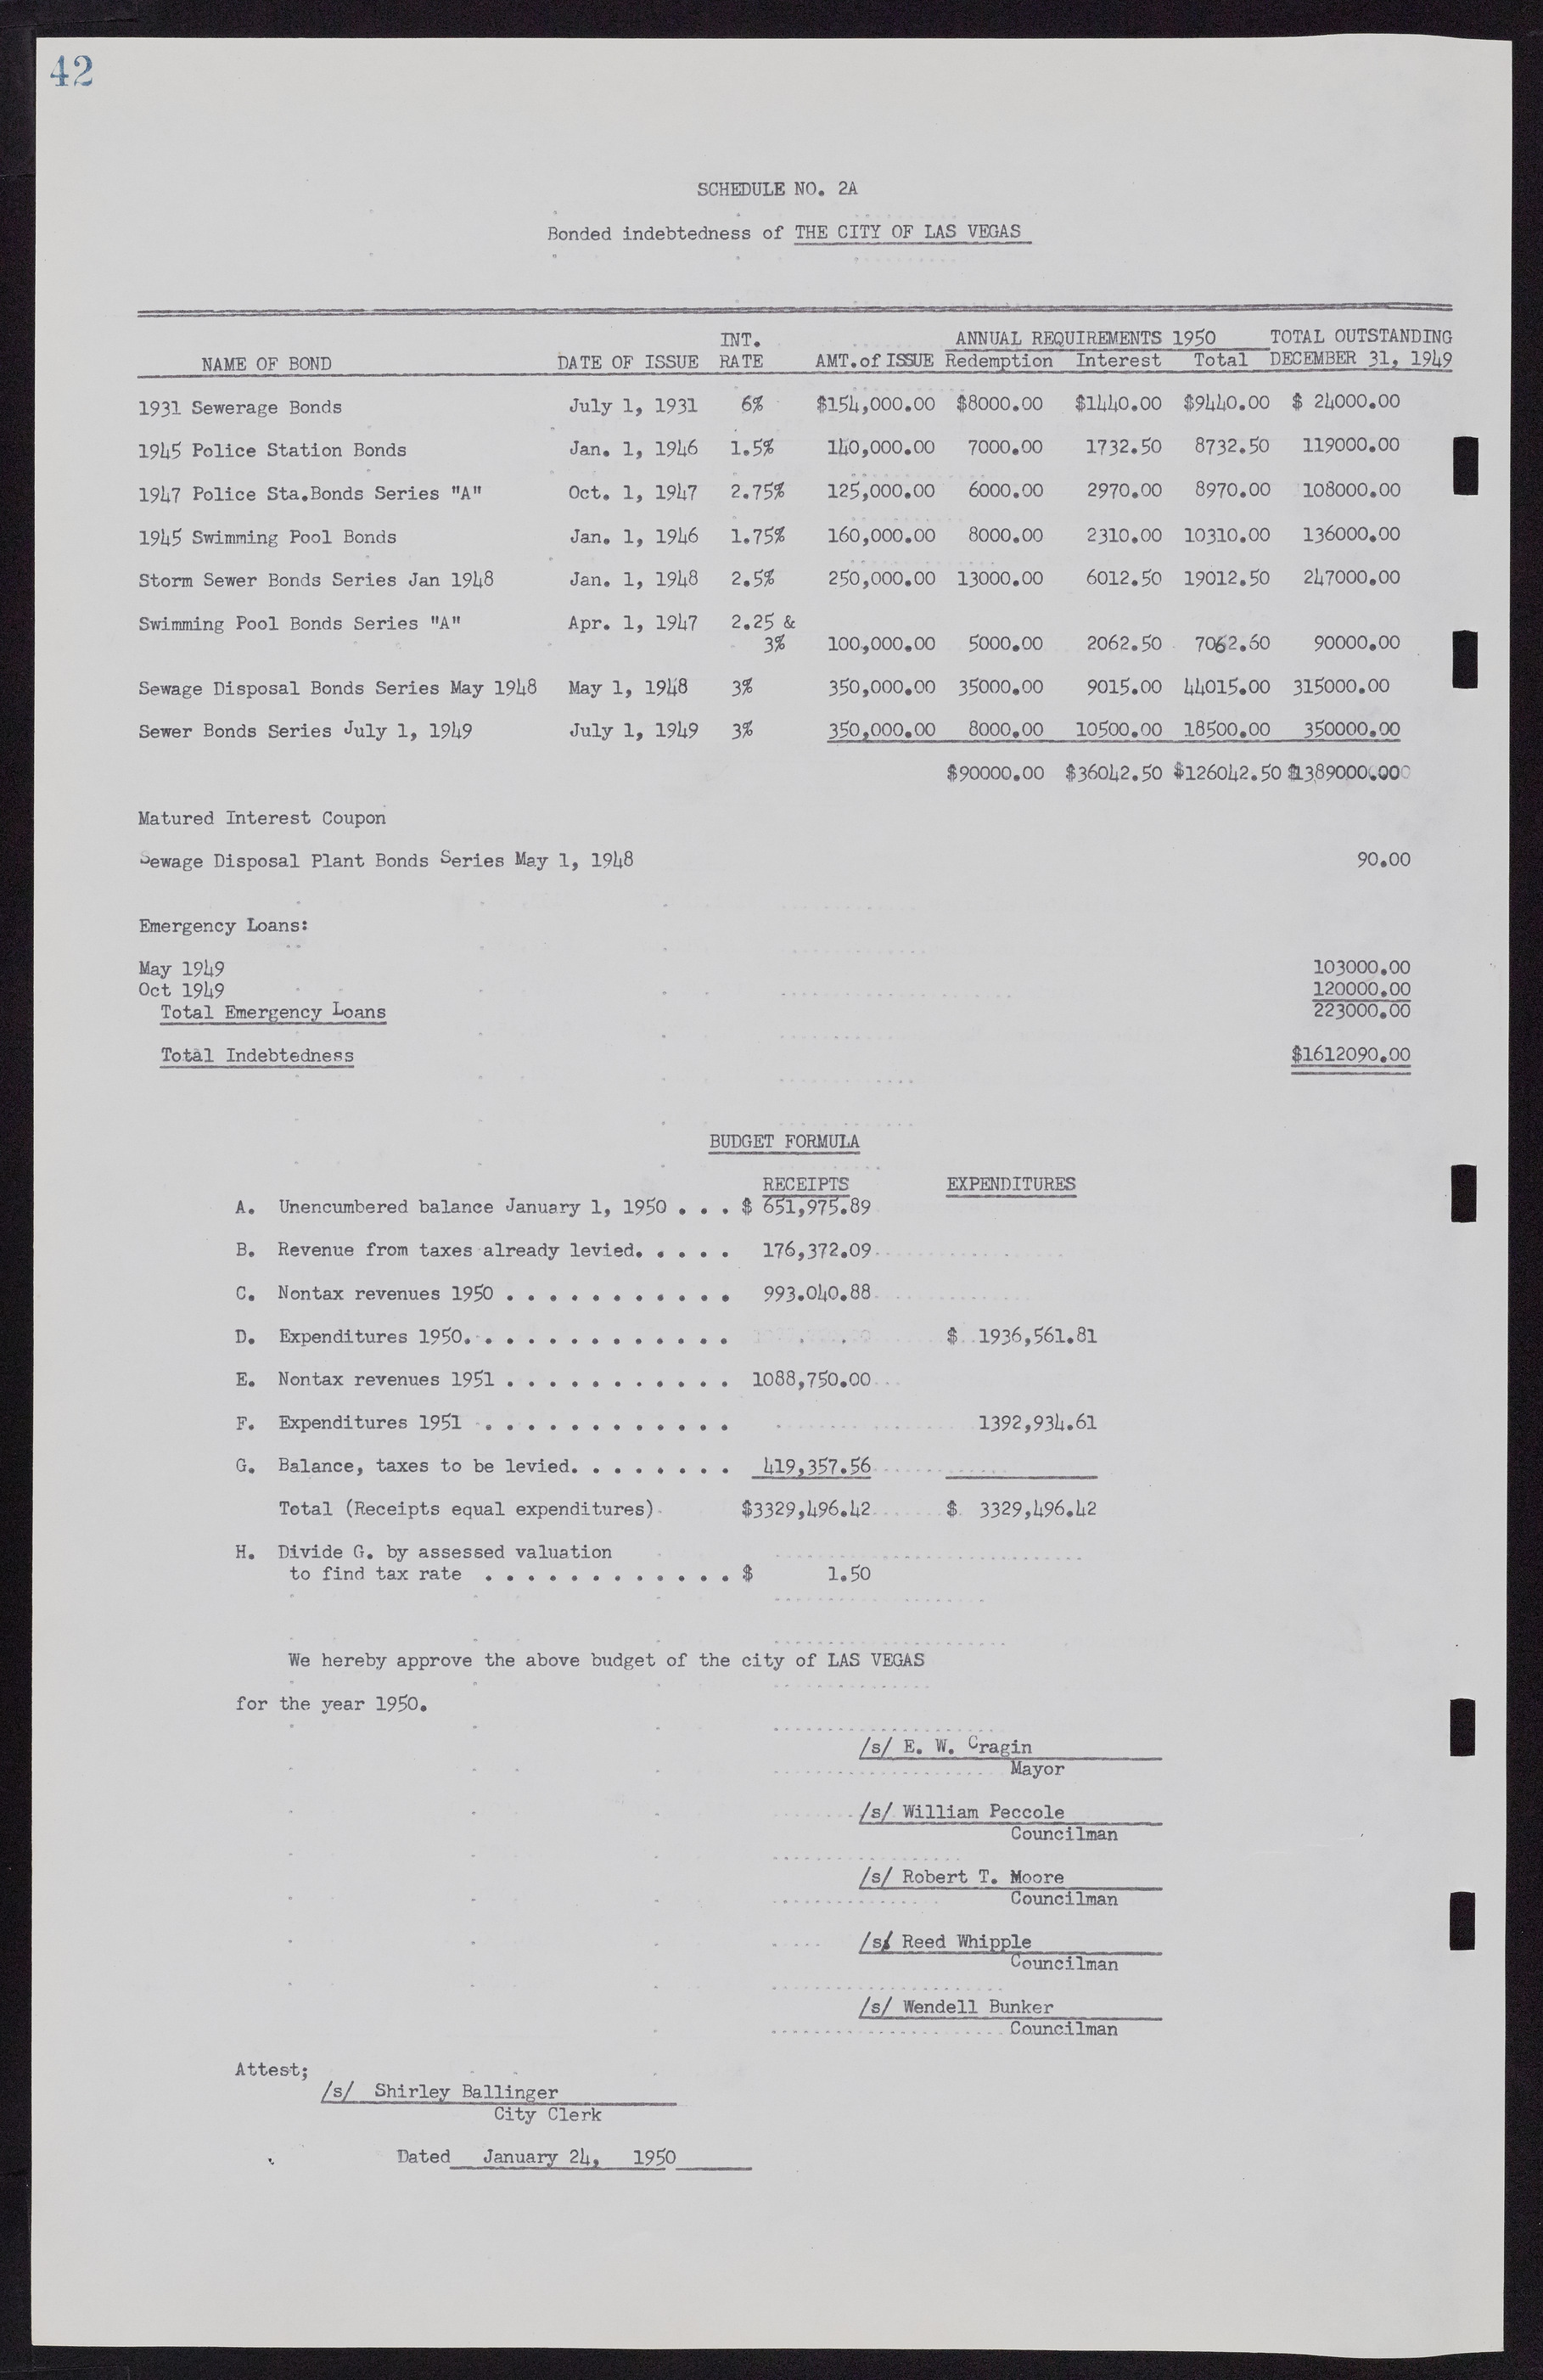 Las Vegas City Commission Minutes, November 7, 1949 to May 21, 1952, lvc000007-50